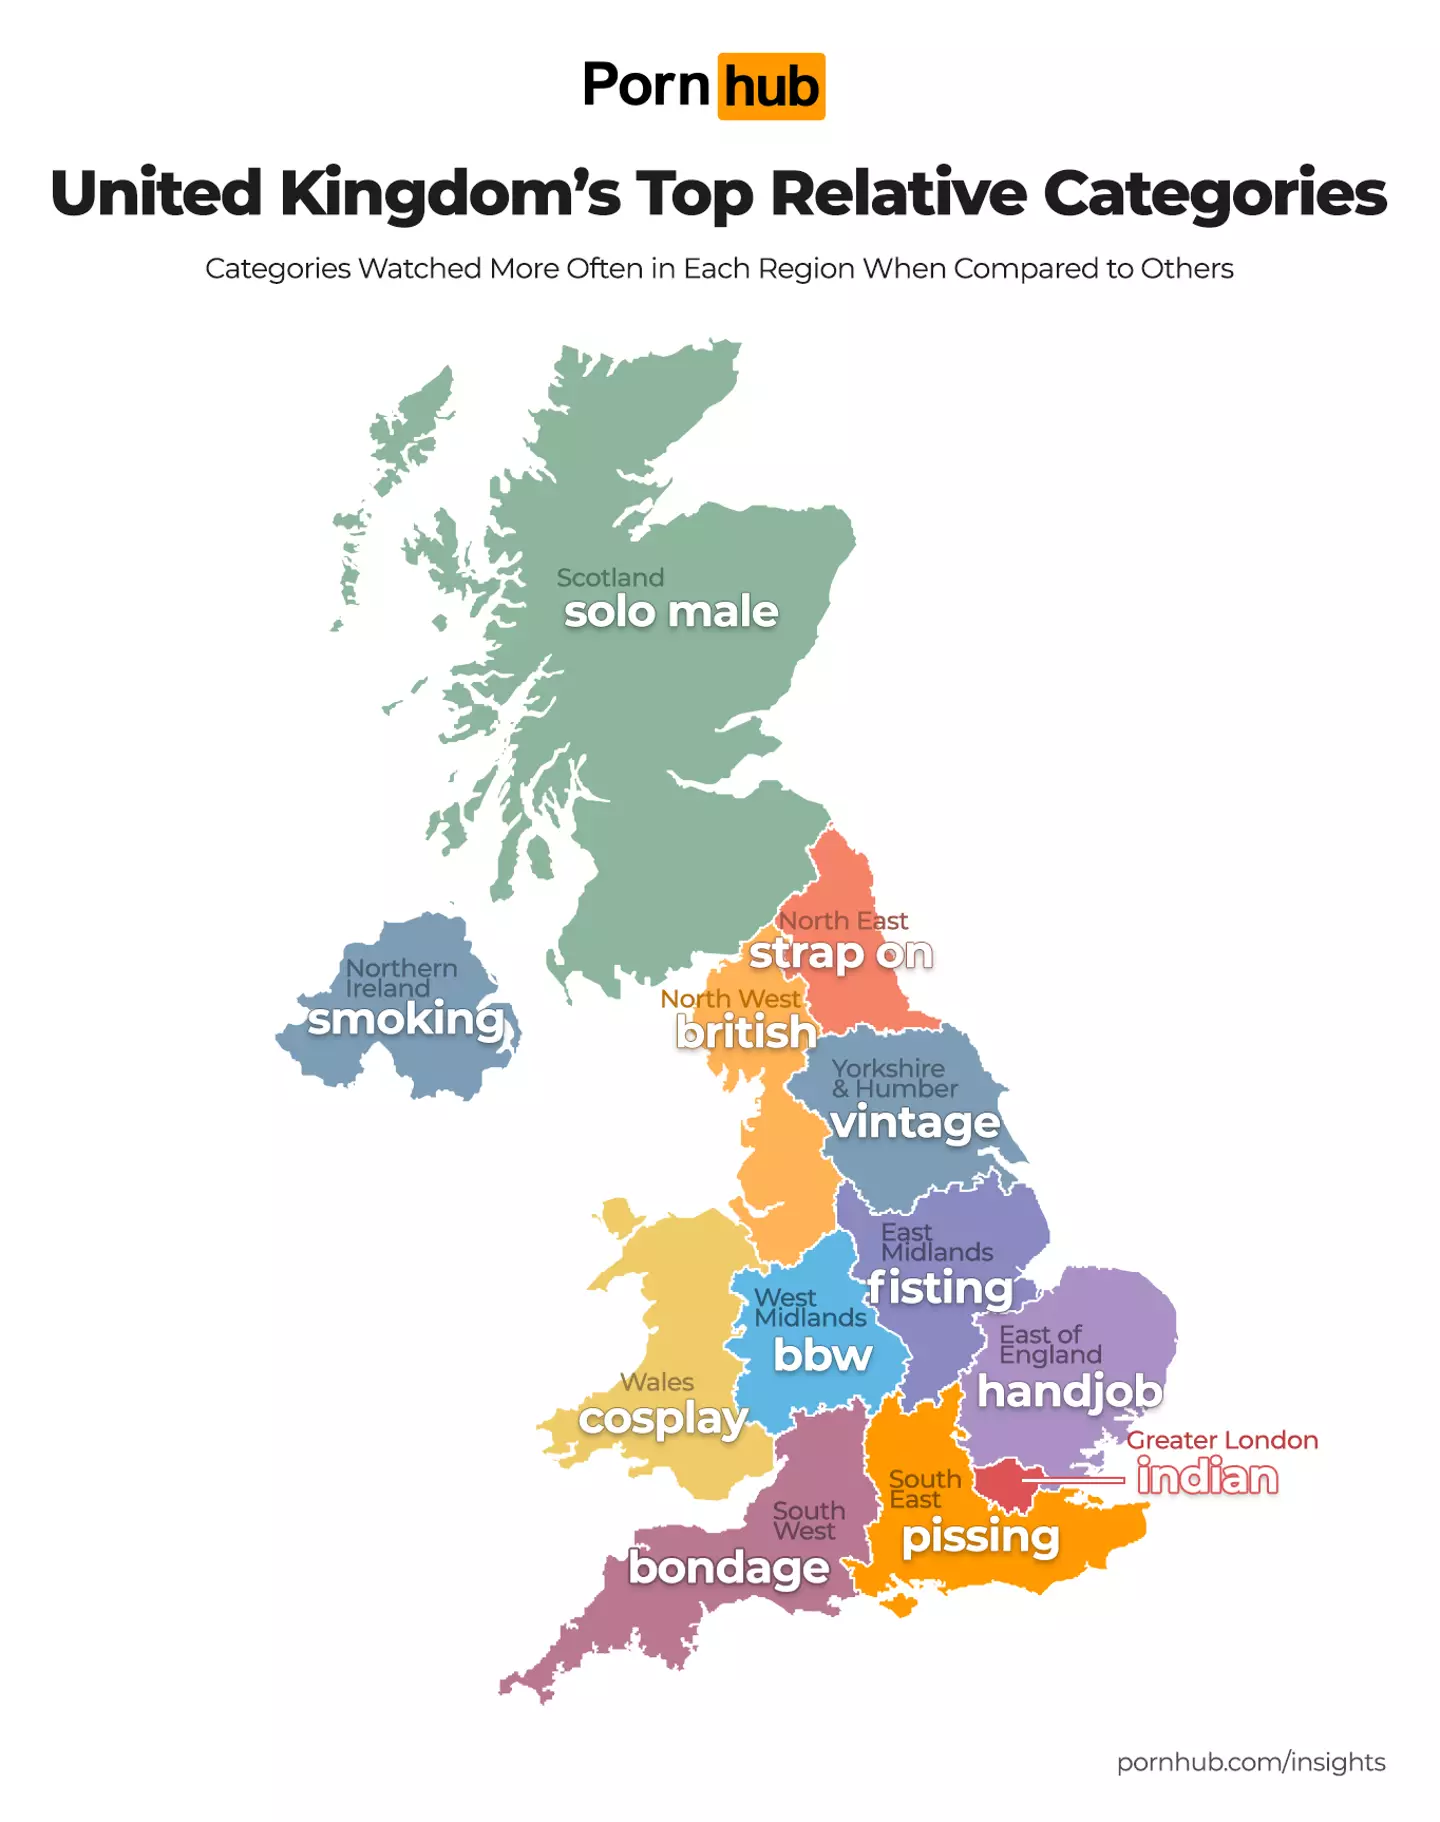 Pornhub has revealed the UK's 'top relative categories'.